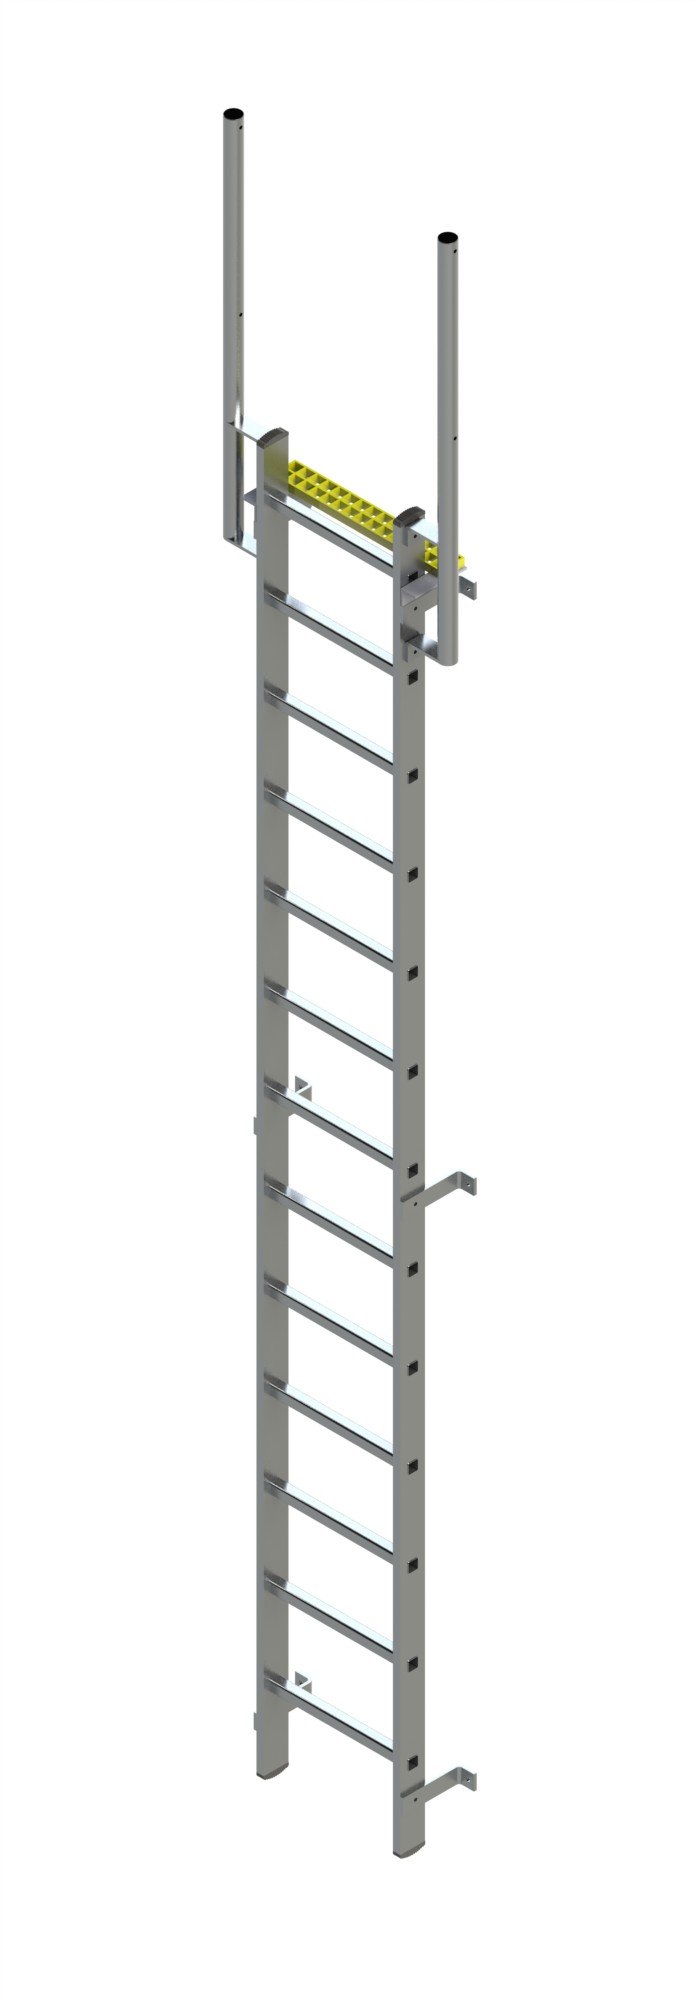 Fixed Vertical Ladder with Walkthrough